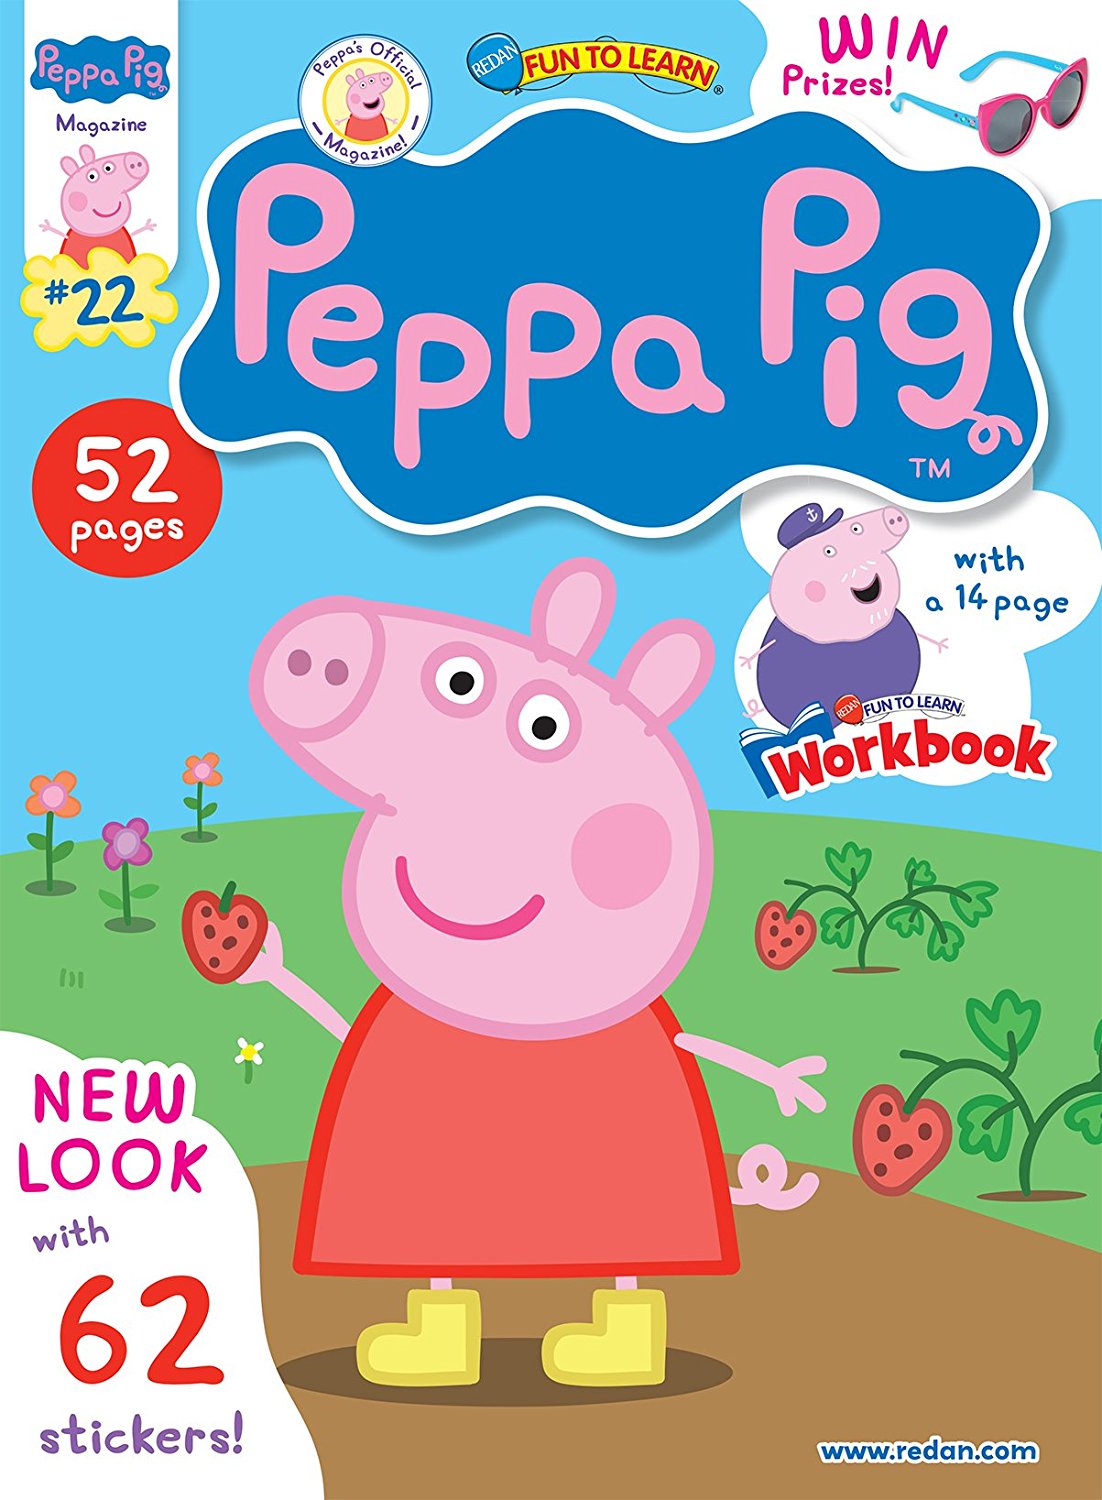 Peppa Pig Magazine Subscription Discount - DiscountMags.com